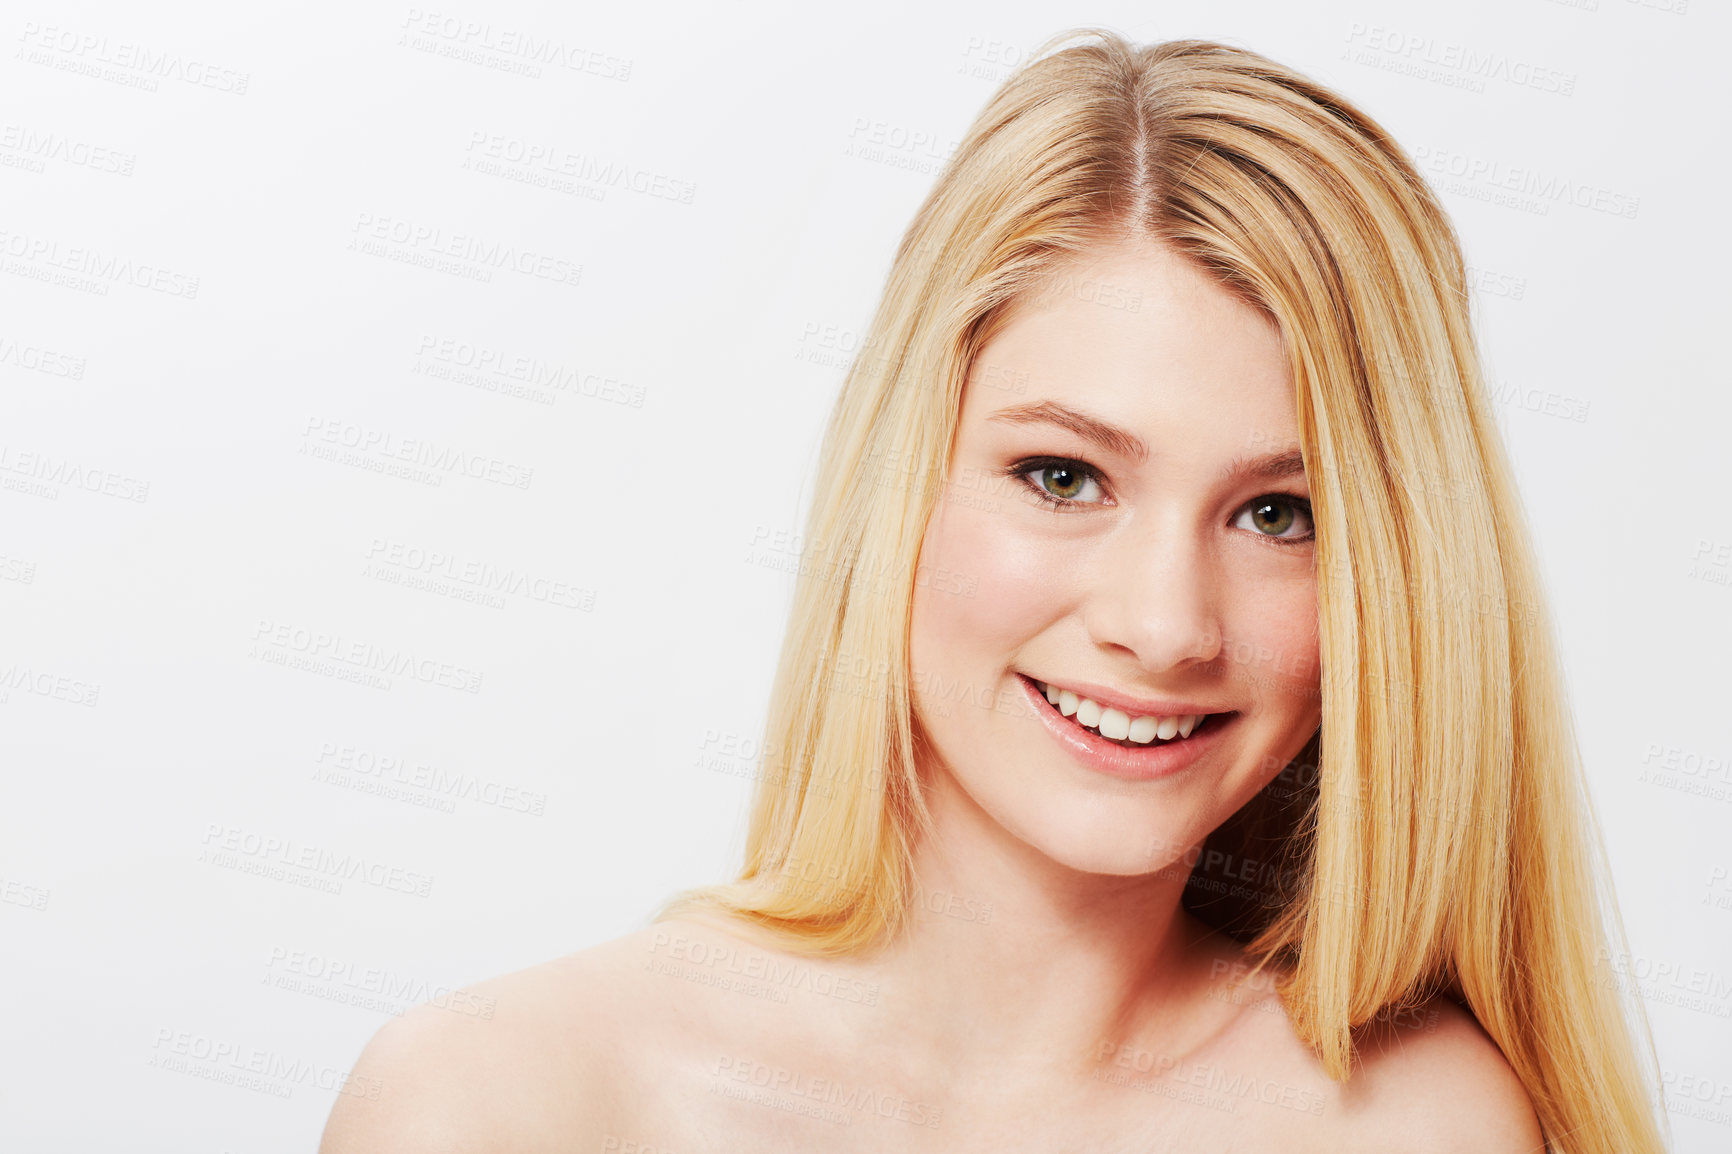 Buy stock photo Studio portrait of a natural blonde beauty